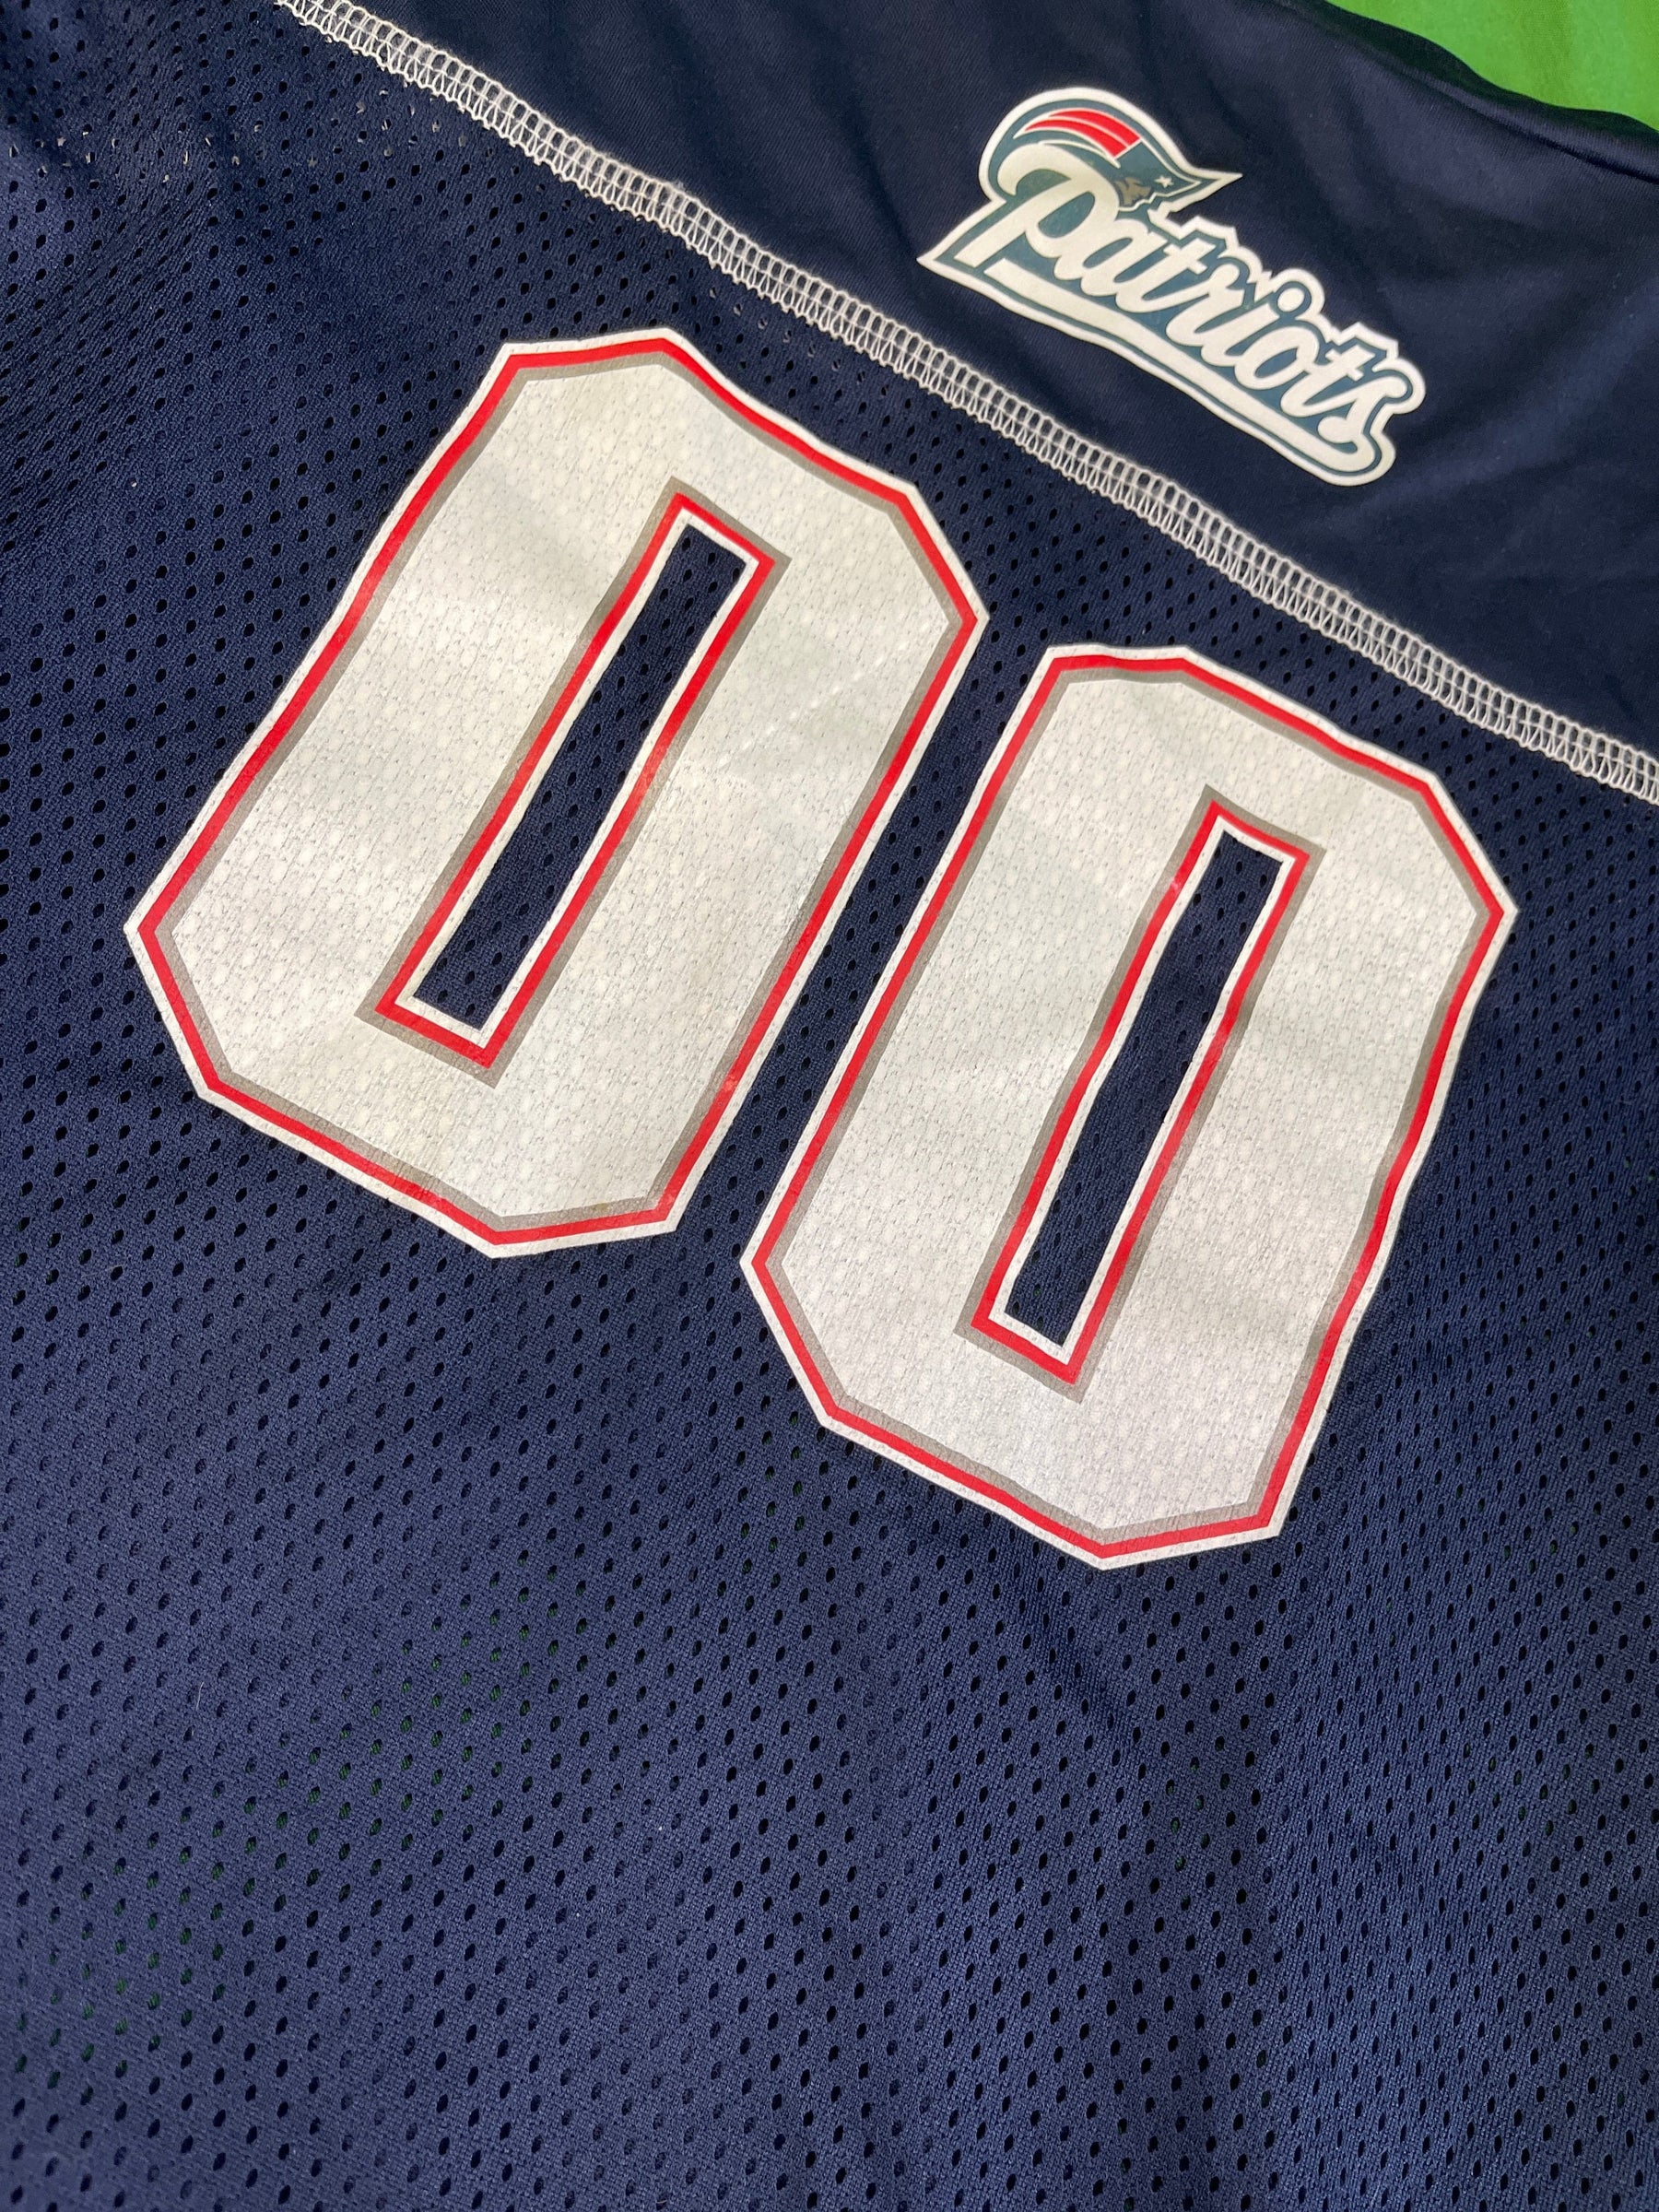 NFL New England Patriots Blue Mesh Dog Jersey Size X-Large